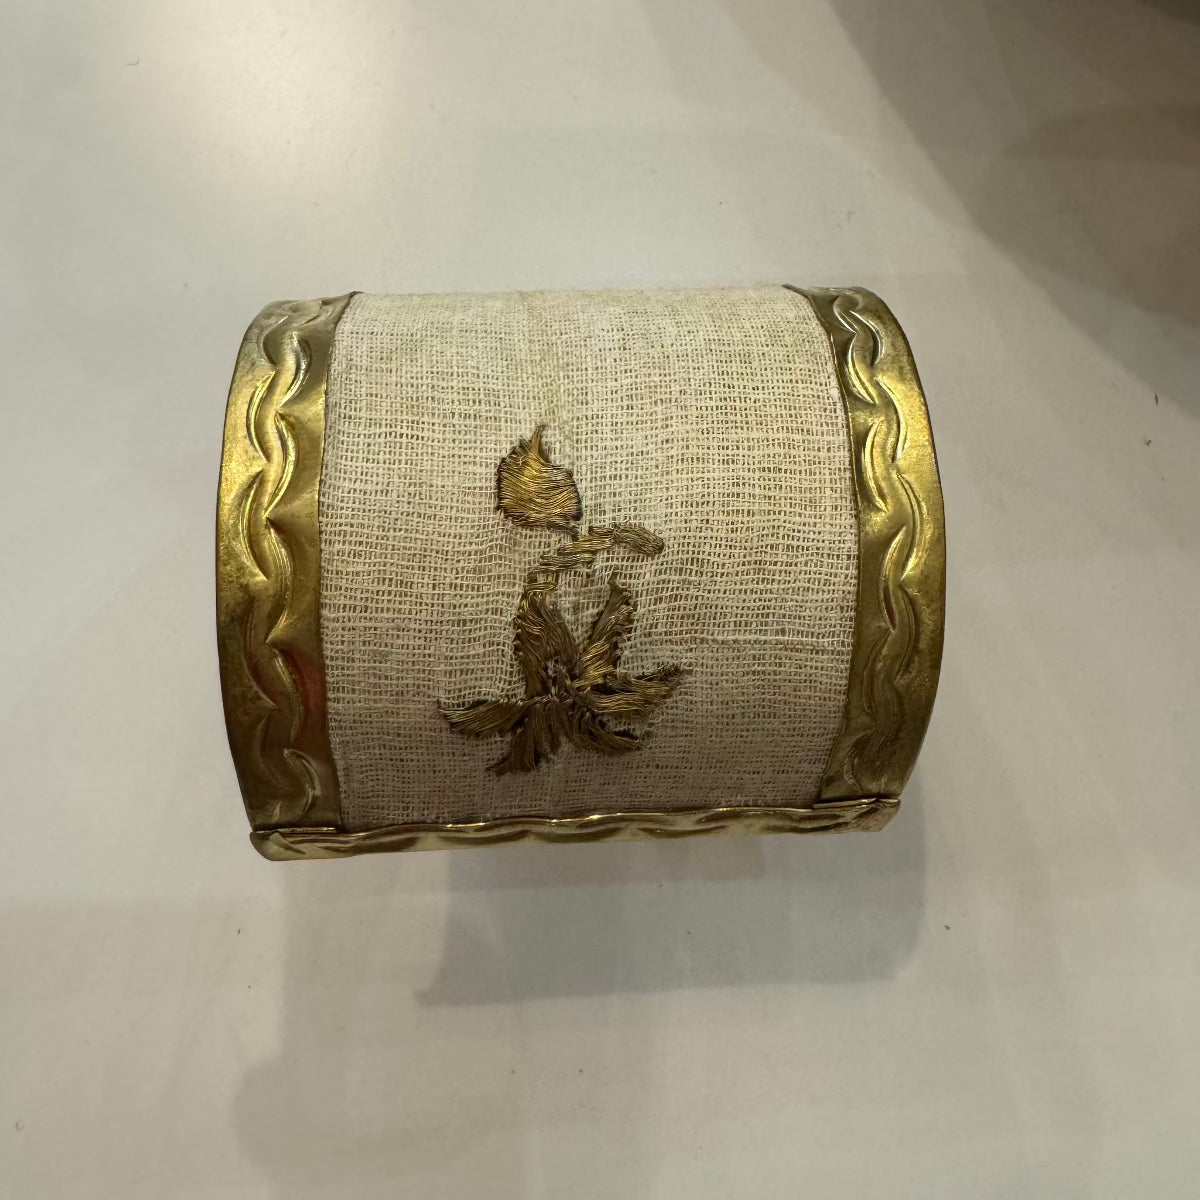 Antique Embroidery Cuff Bracelet | White and Gold New Jewelry Eyup Gunduz C 